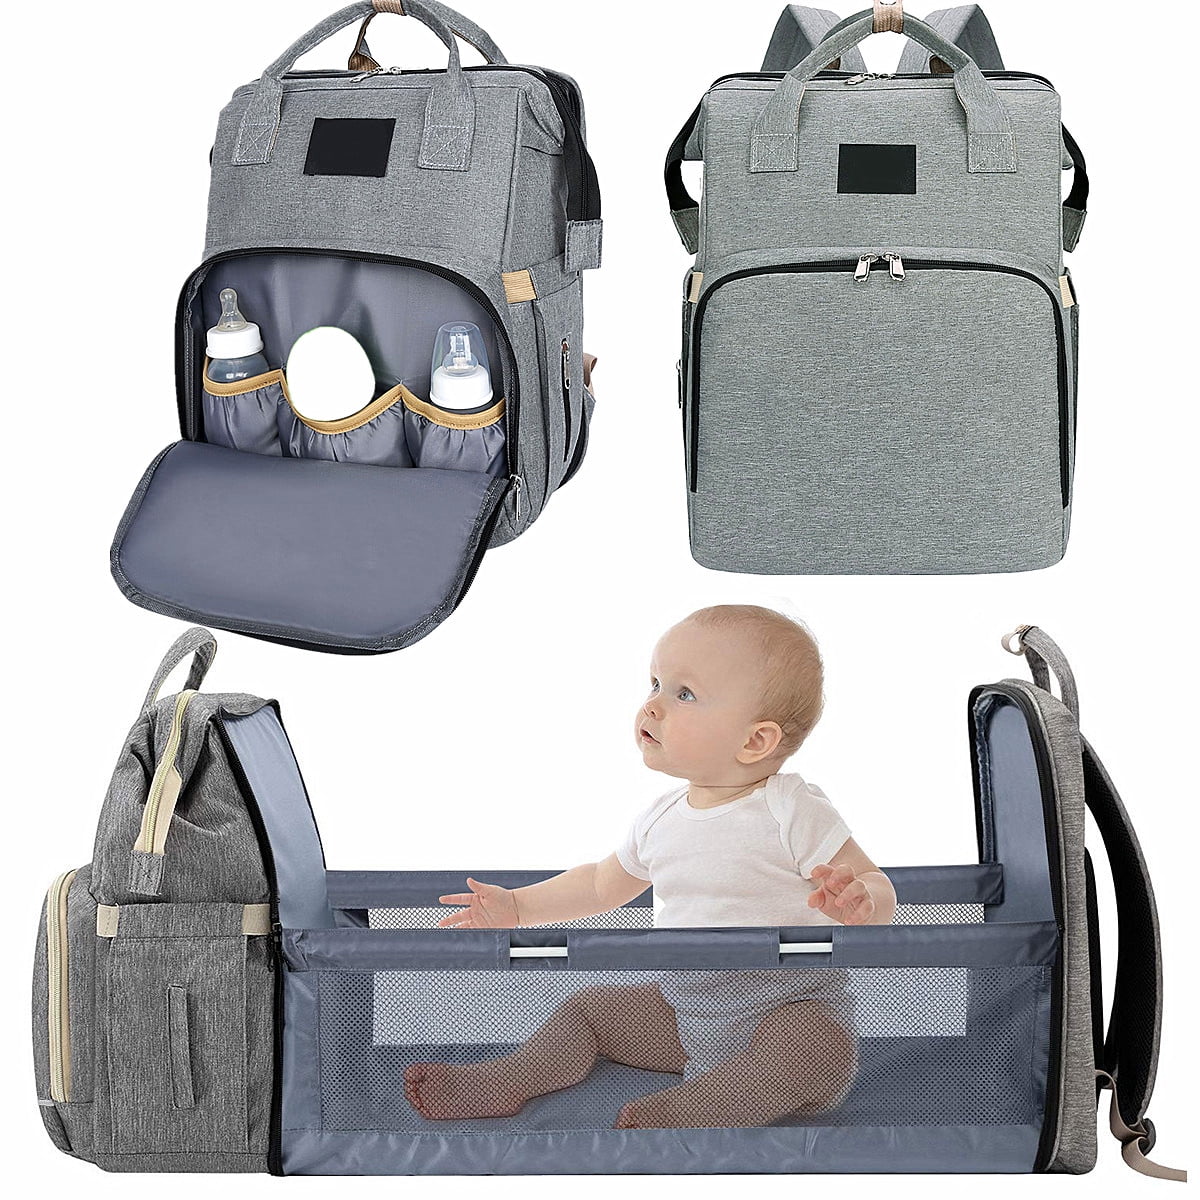 Disney Baby Changing Backpack / Diaper Bag